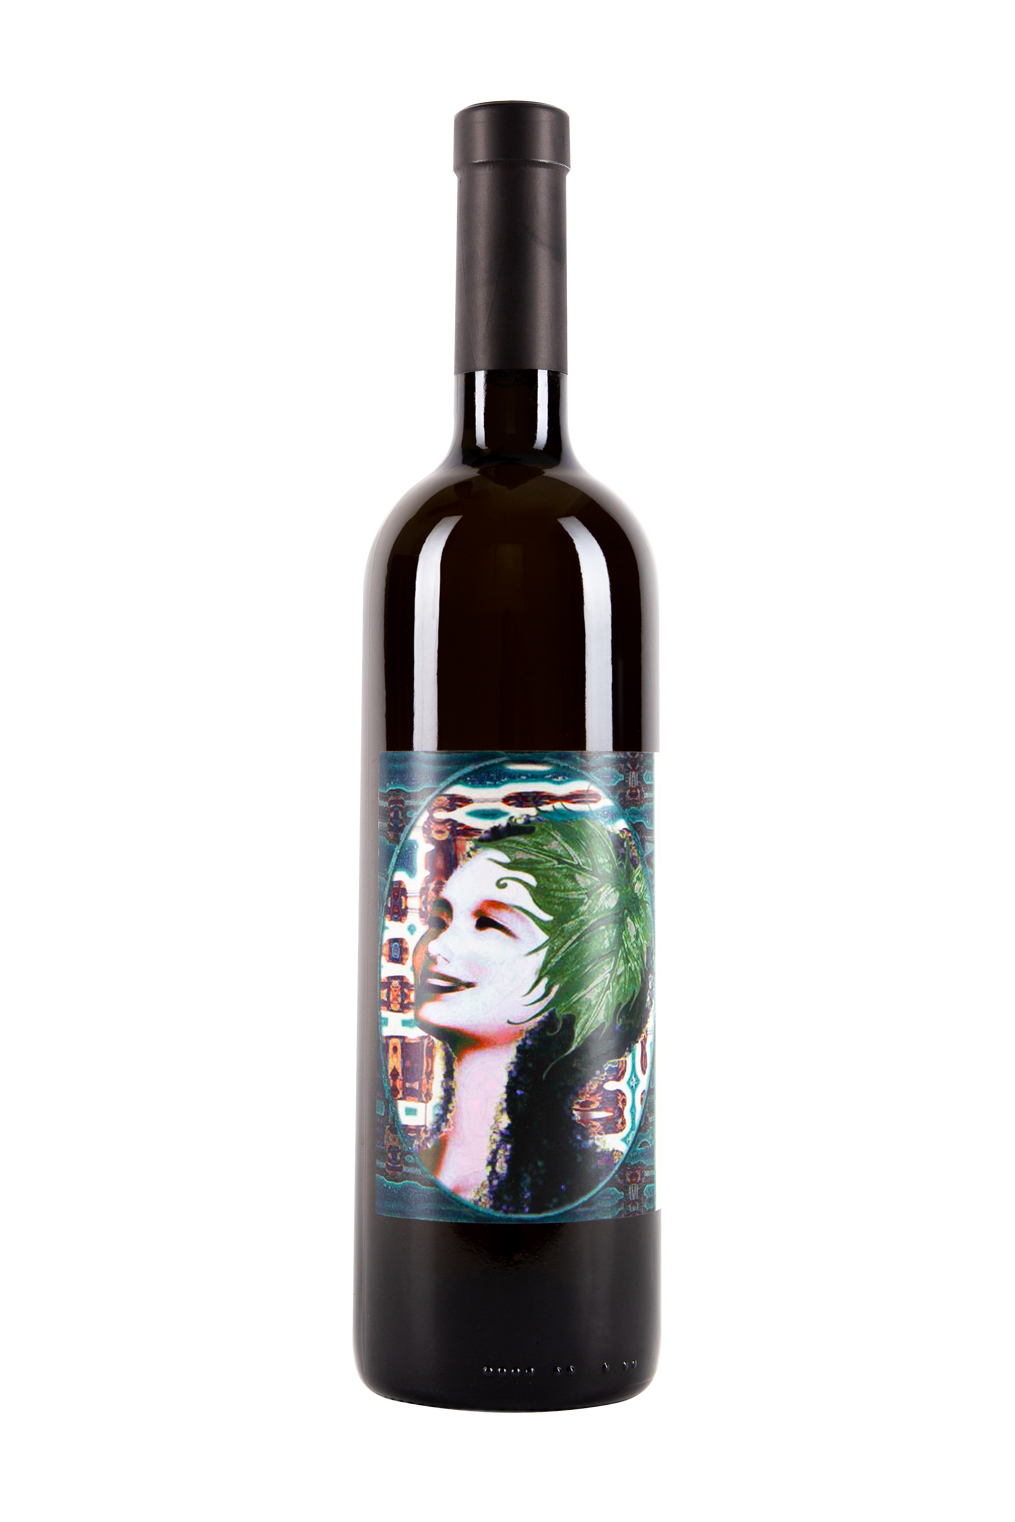 Gaia 2018- Cantina Giardino- Vino Italiano- Vino Natural- Vino Baja Intervención- Vino Vivo- Vino Desnudo- Natural Wine- Italian Wine- Salvaje Vinos